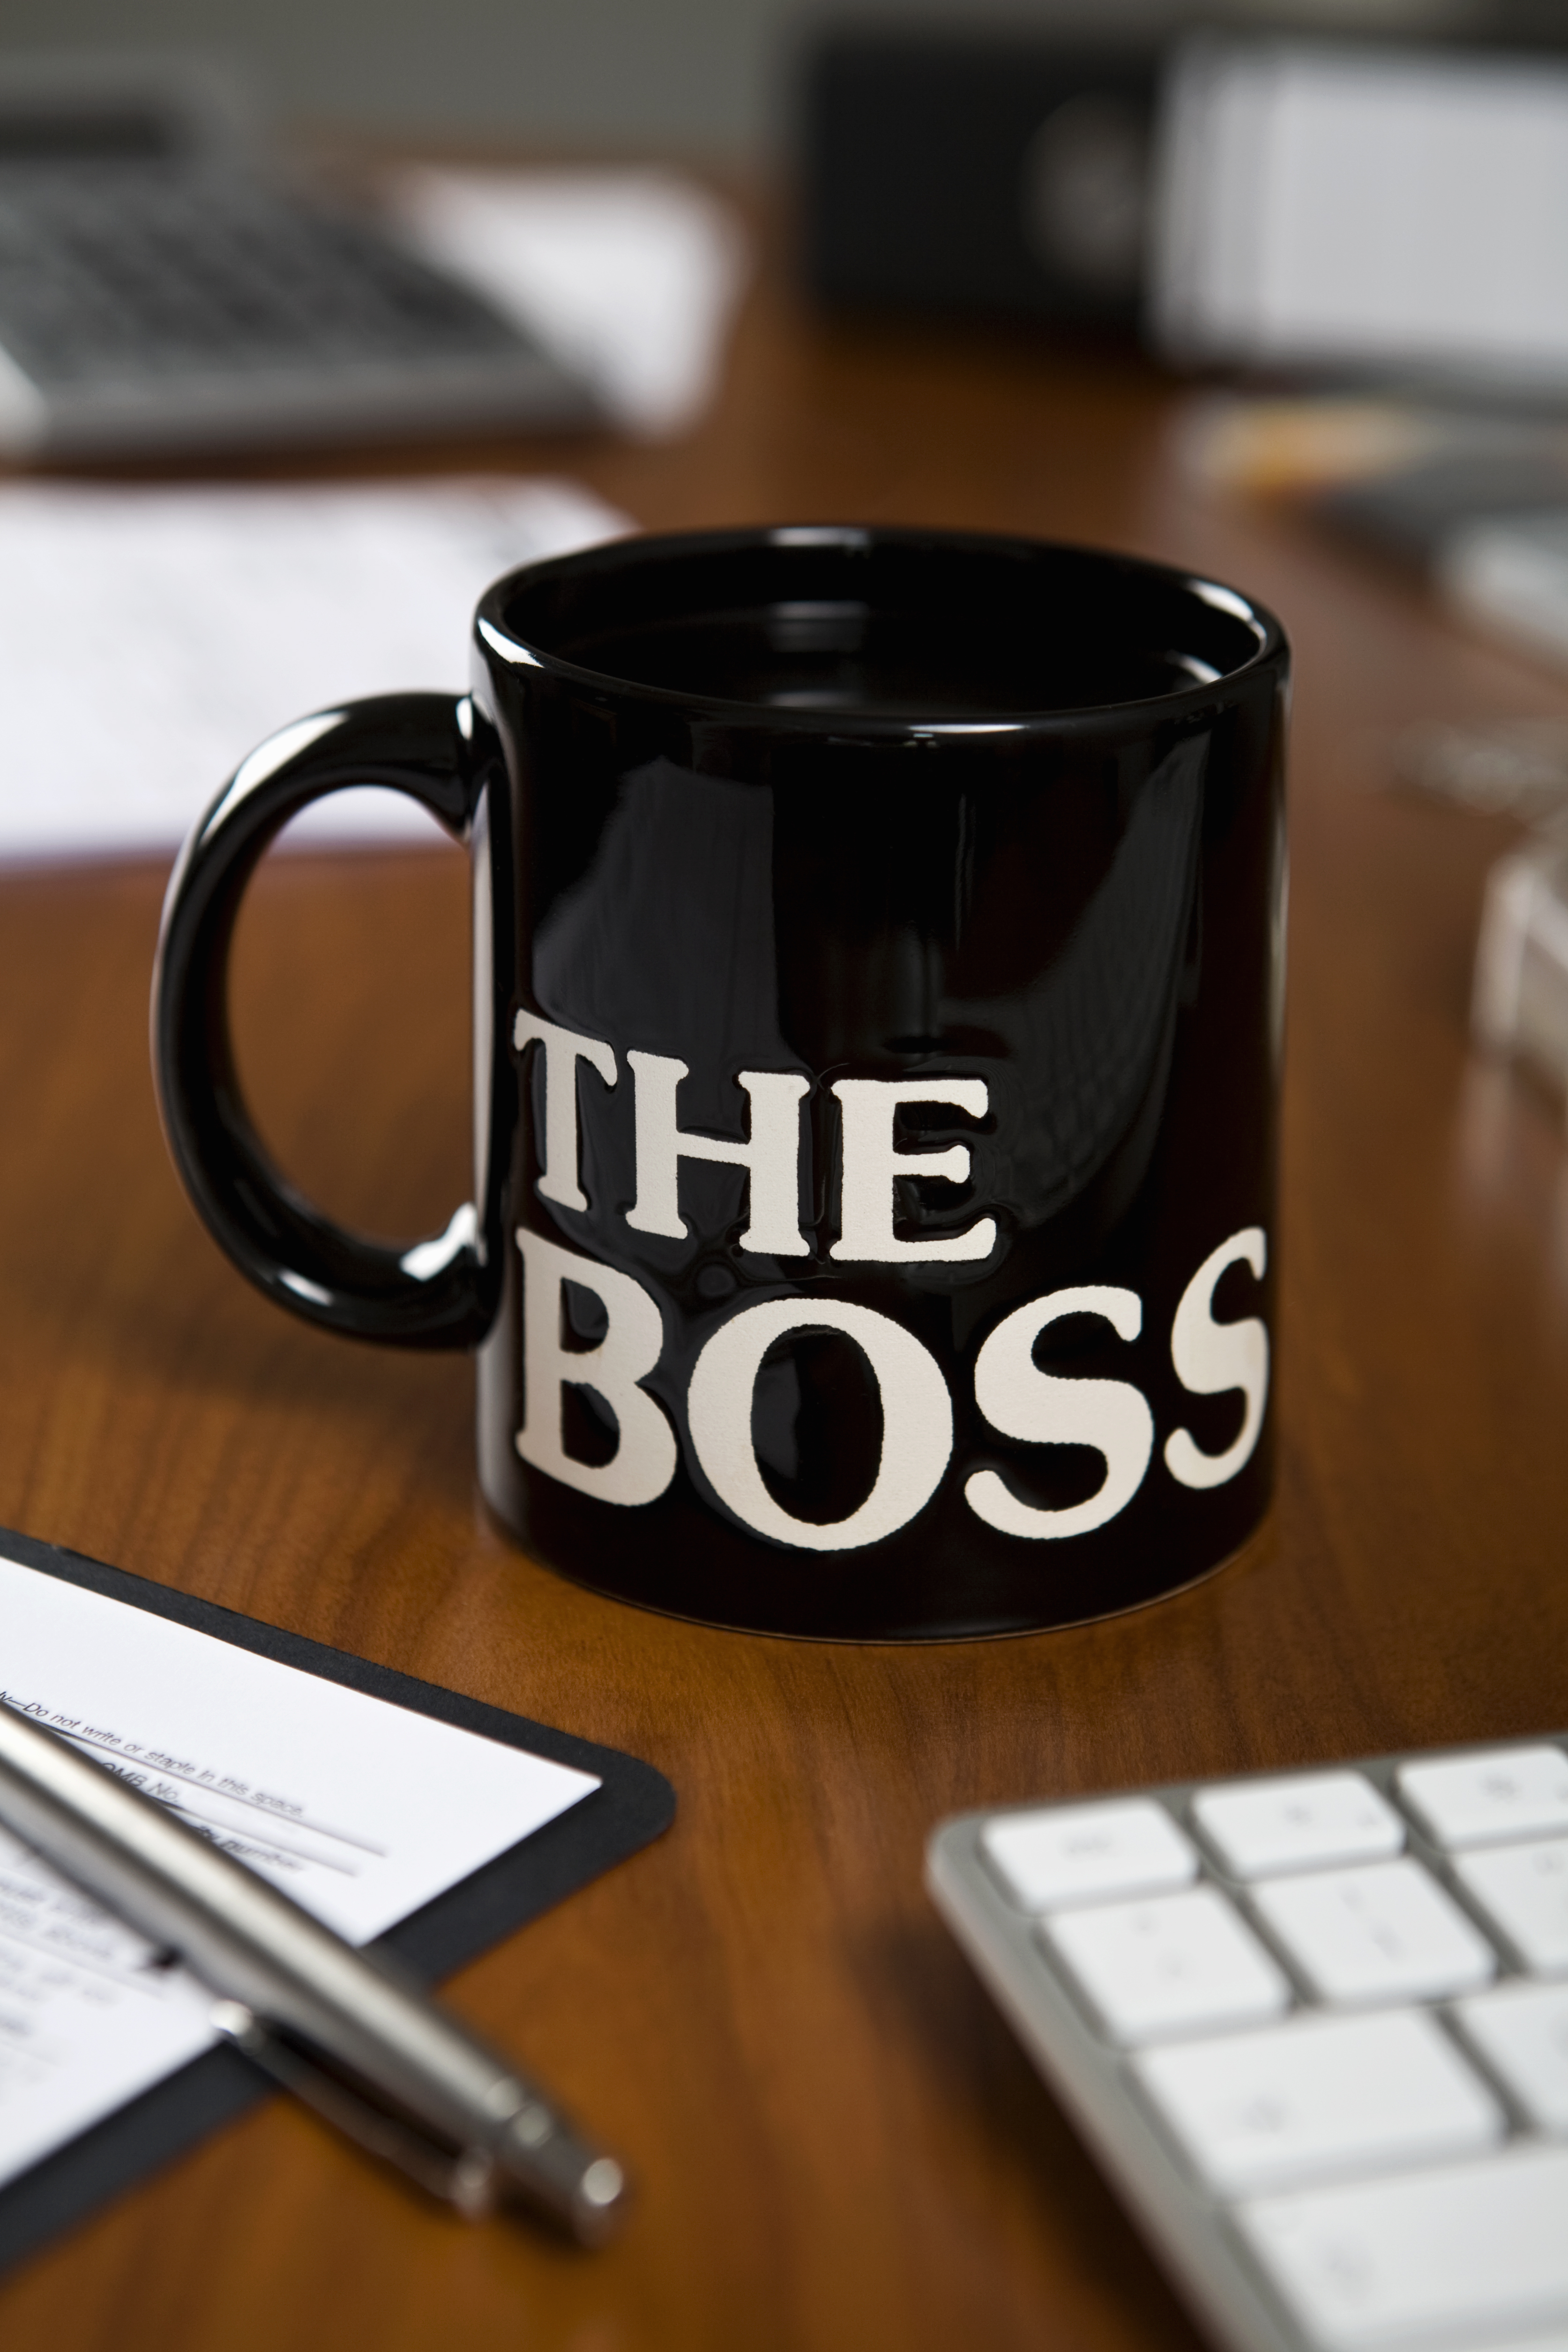 The Boss mug on a desk